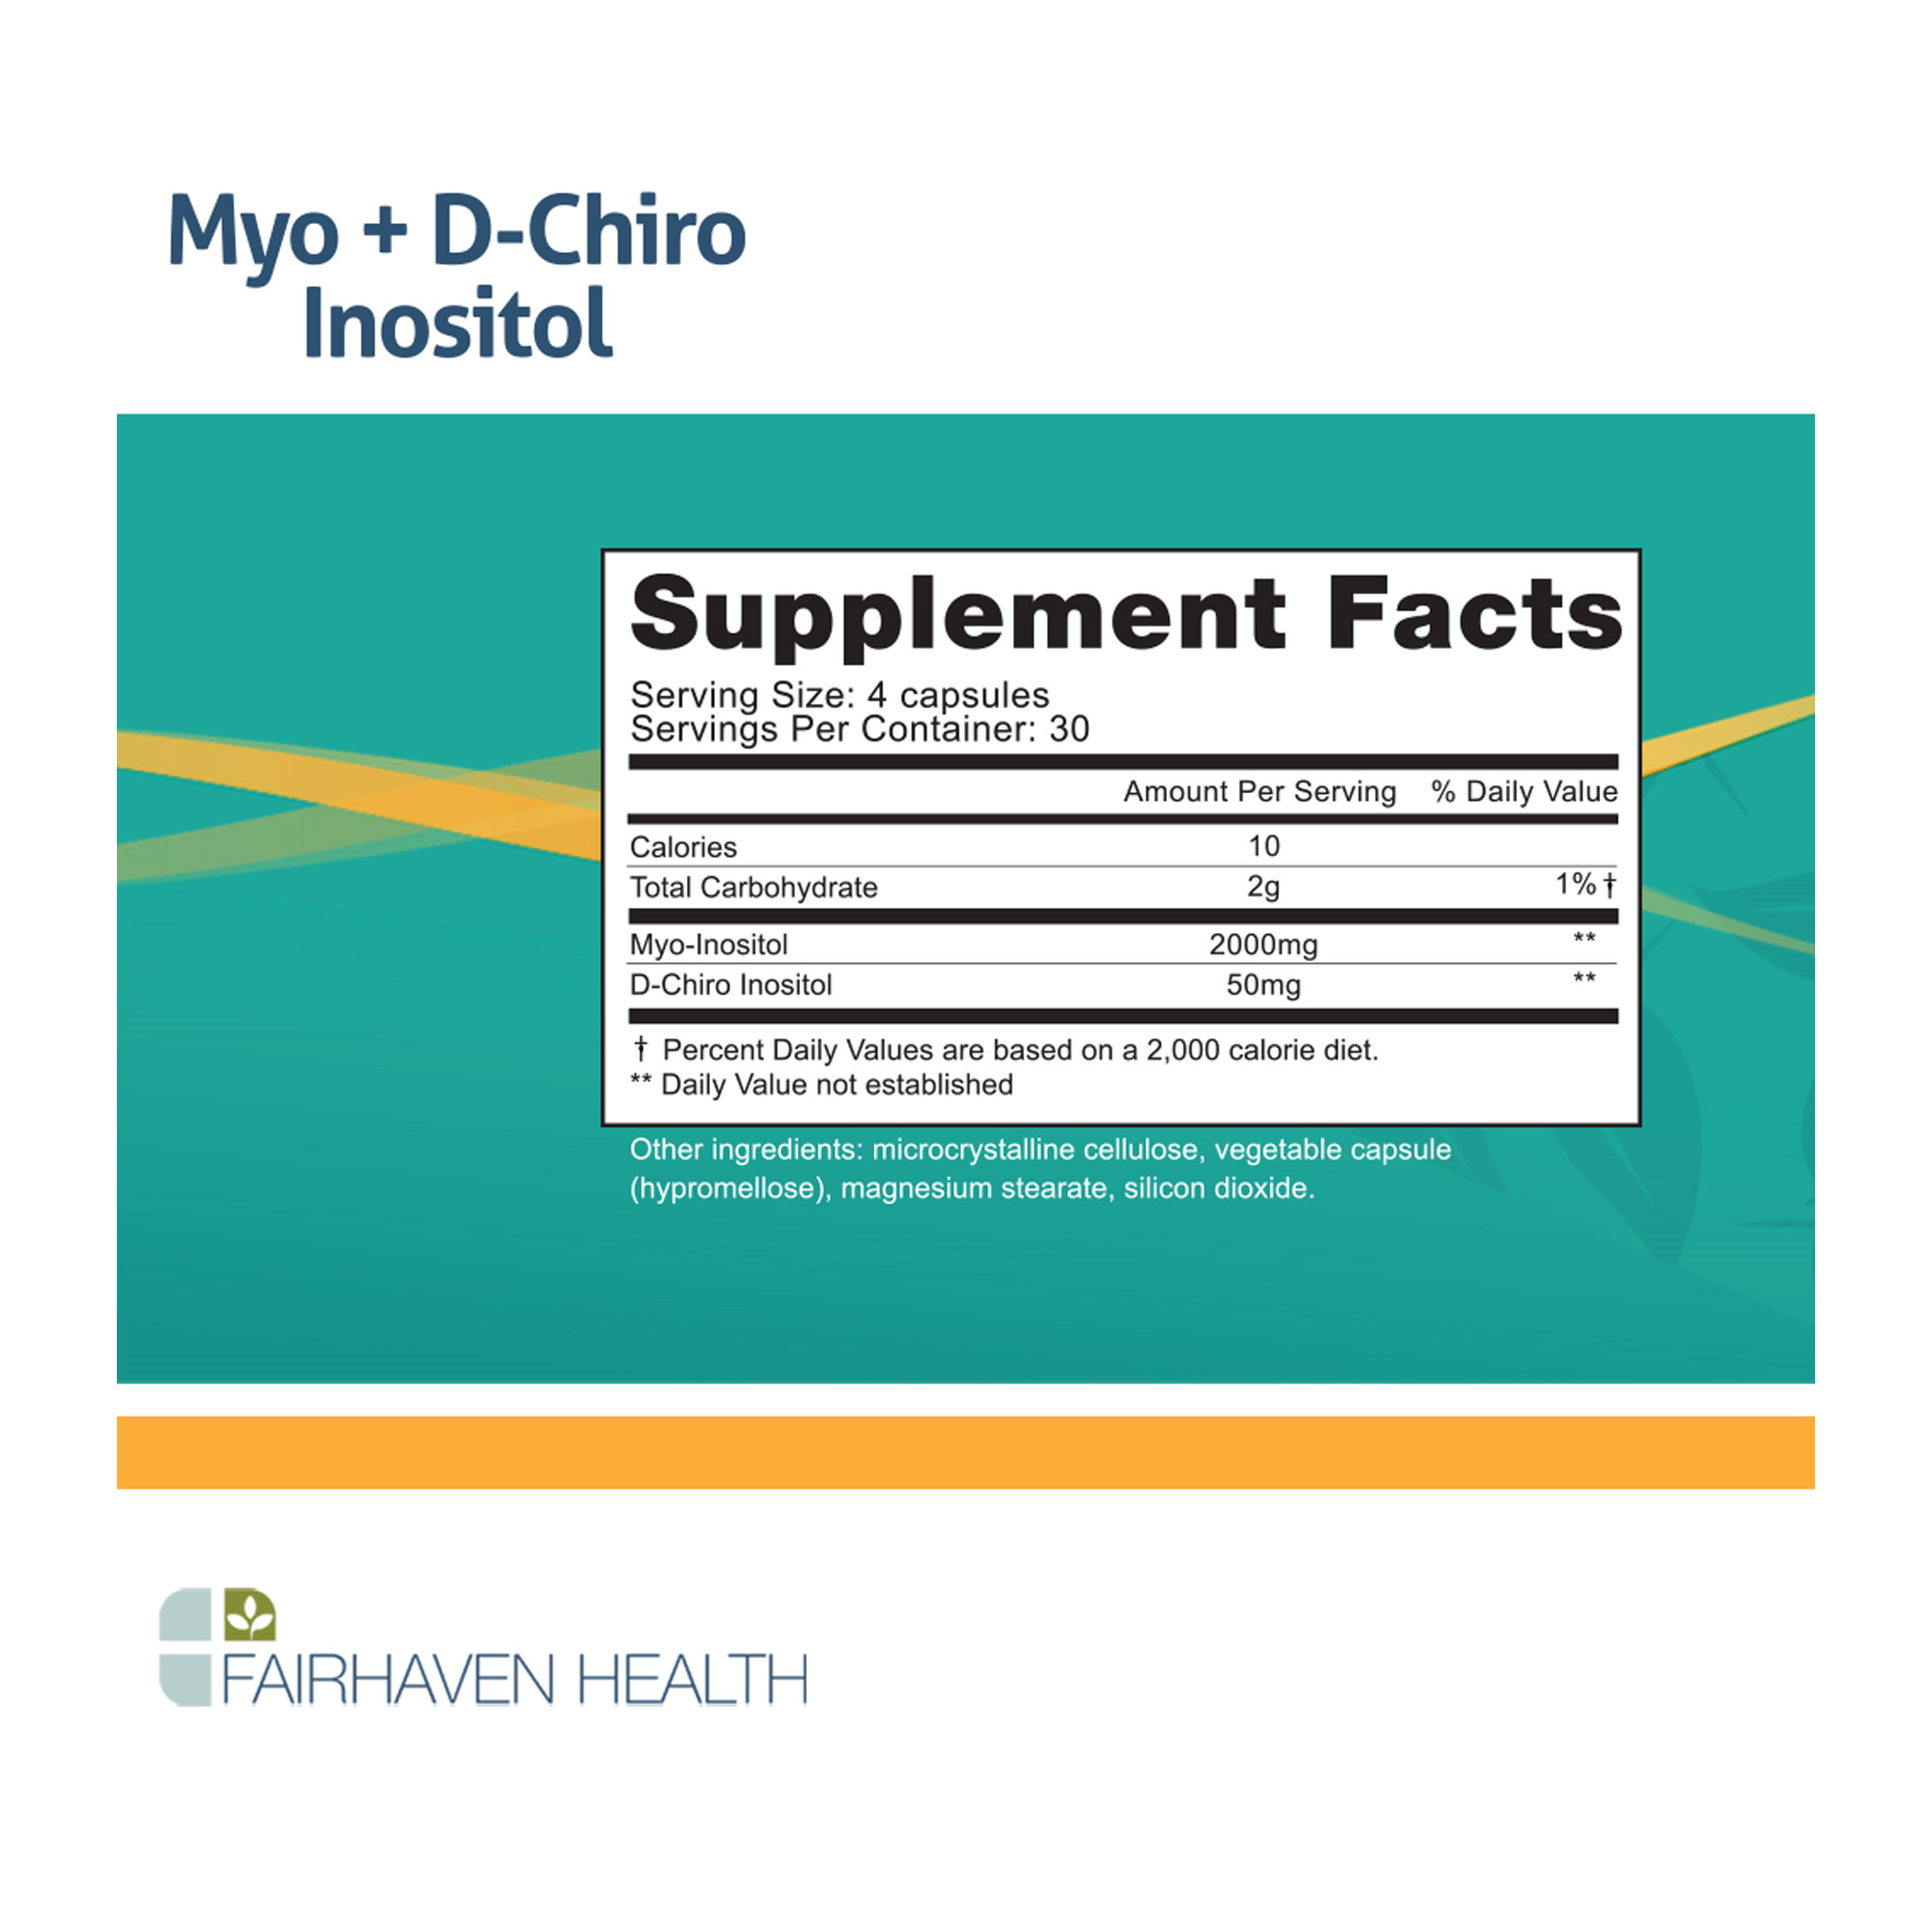 Myo + D-Chiro Inositol 120c